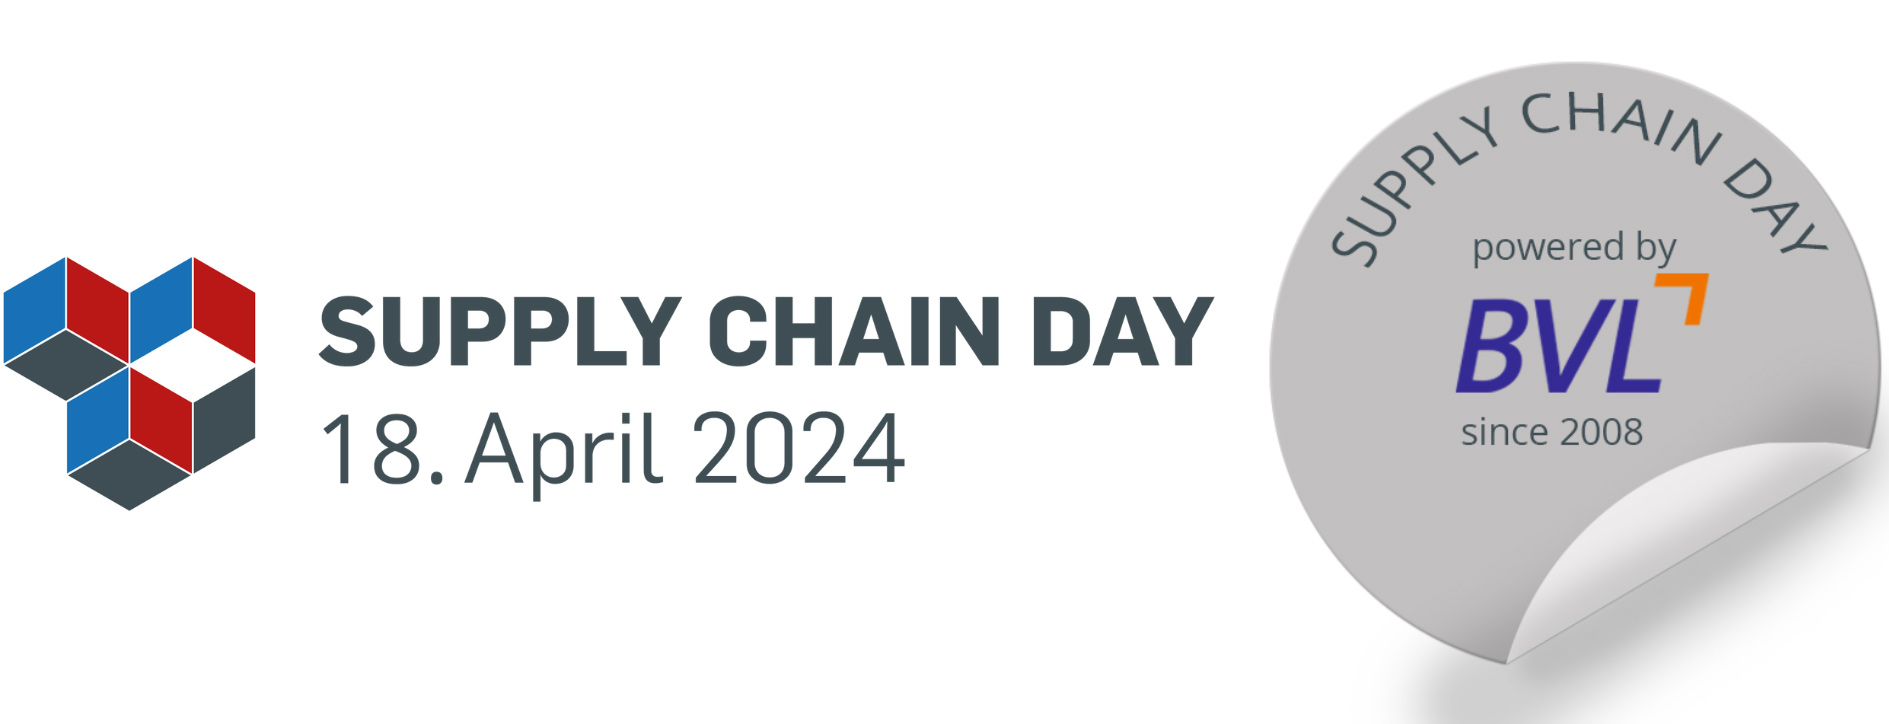 Supply Chain Day 2024